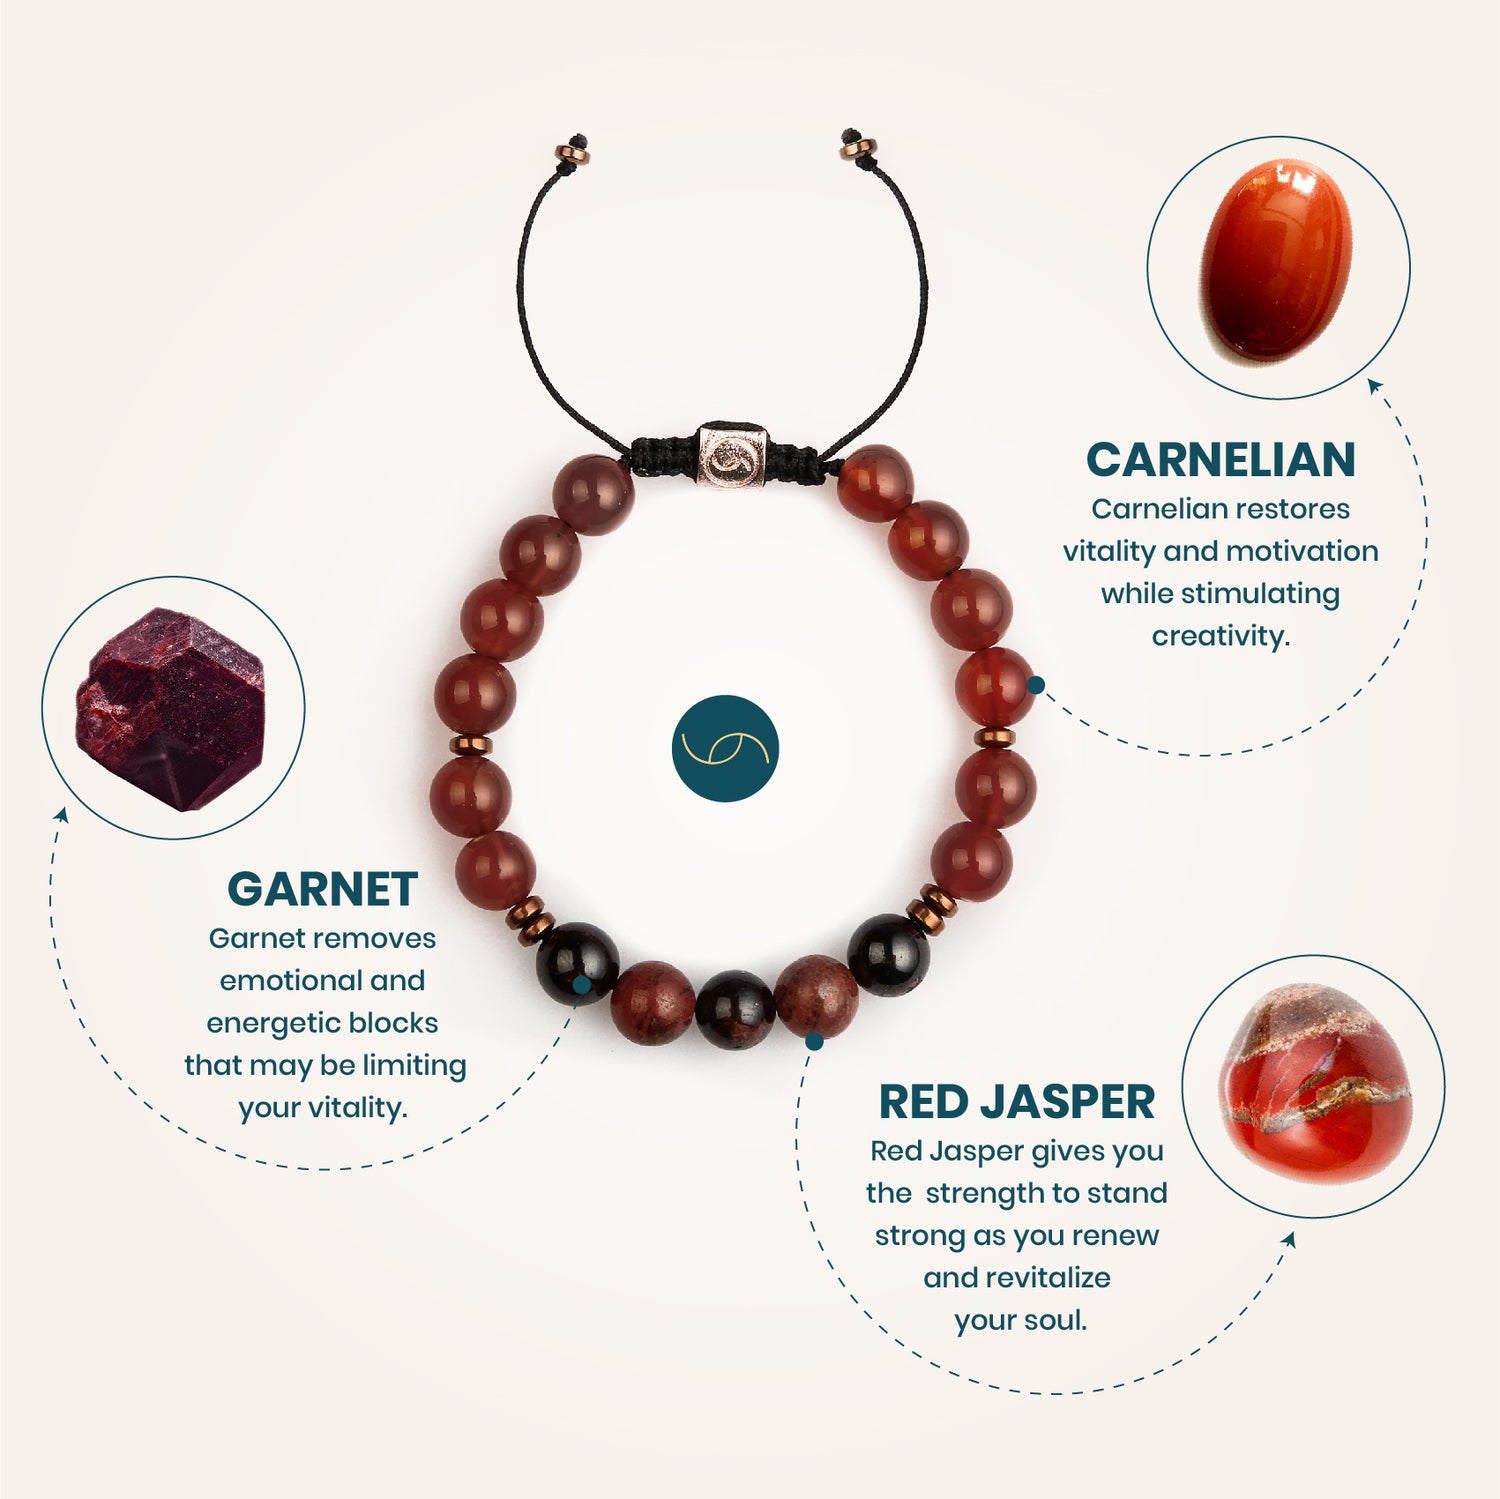 Benefits of Garnet Carnelian and Red Jasper